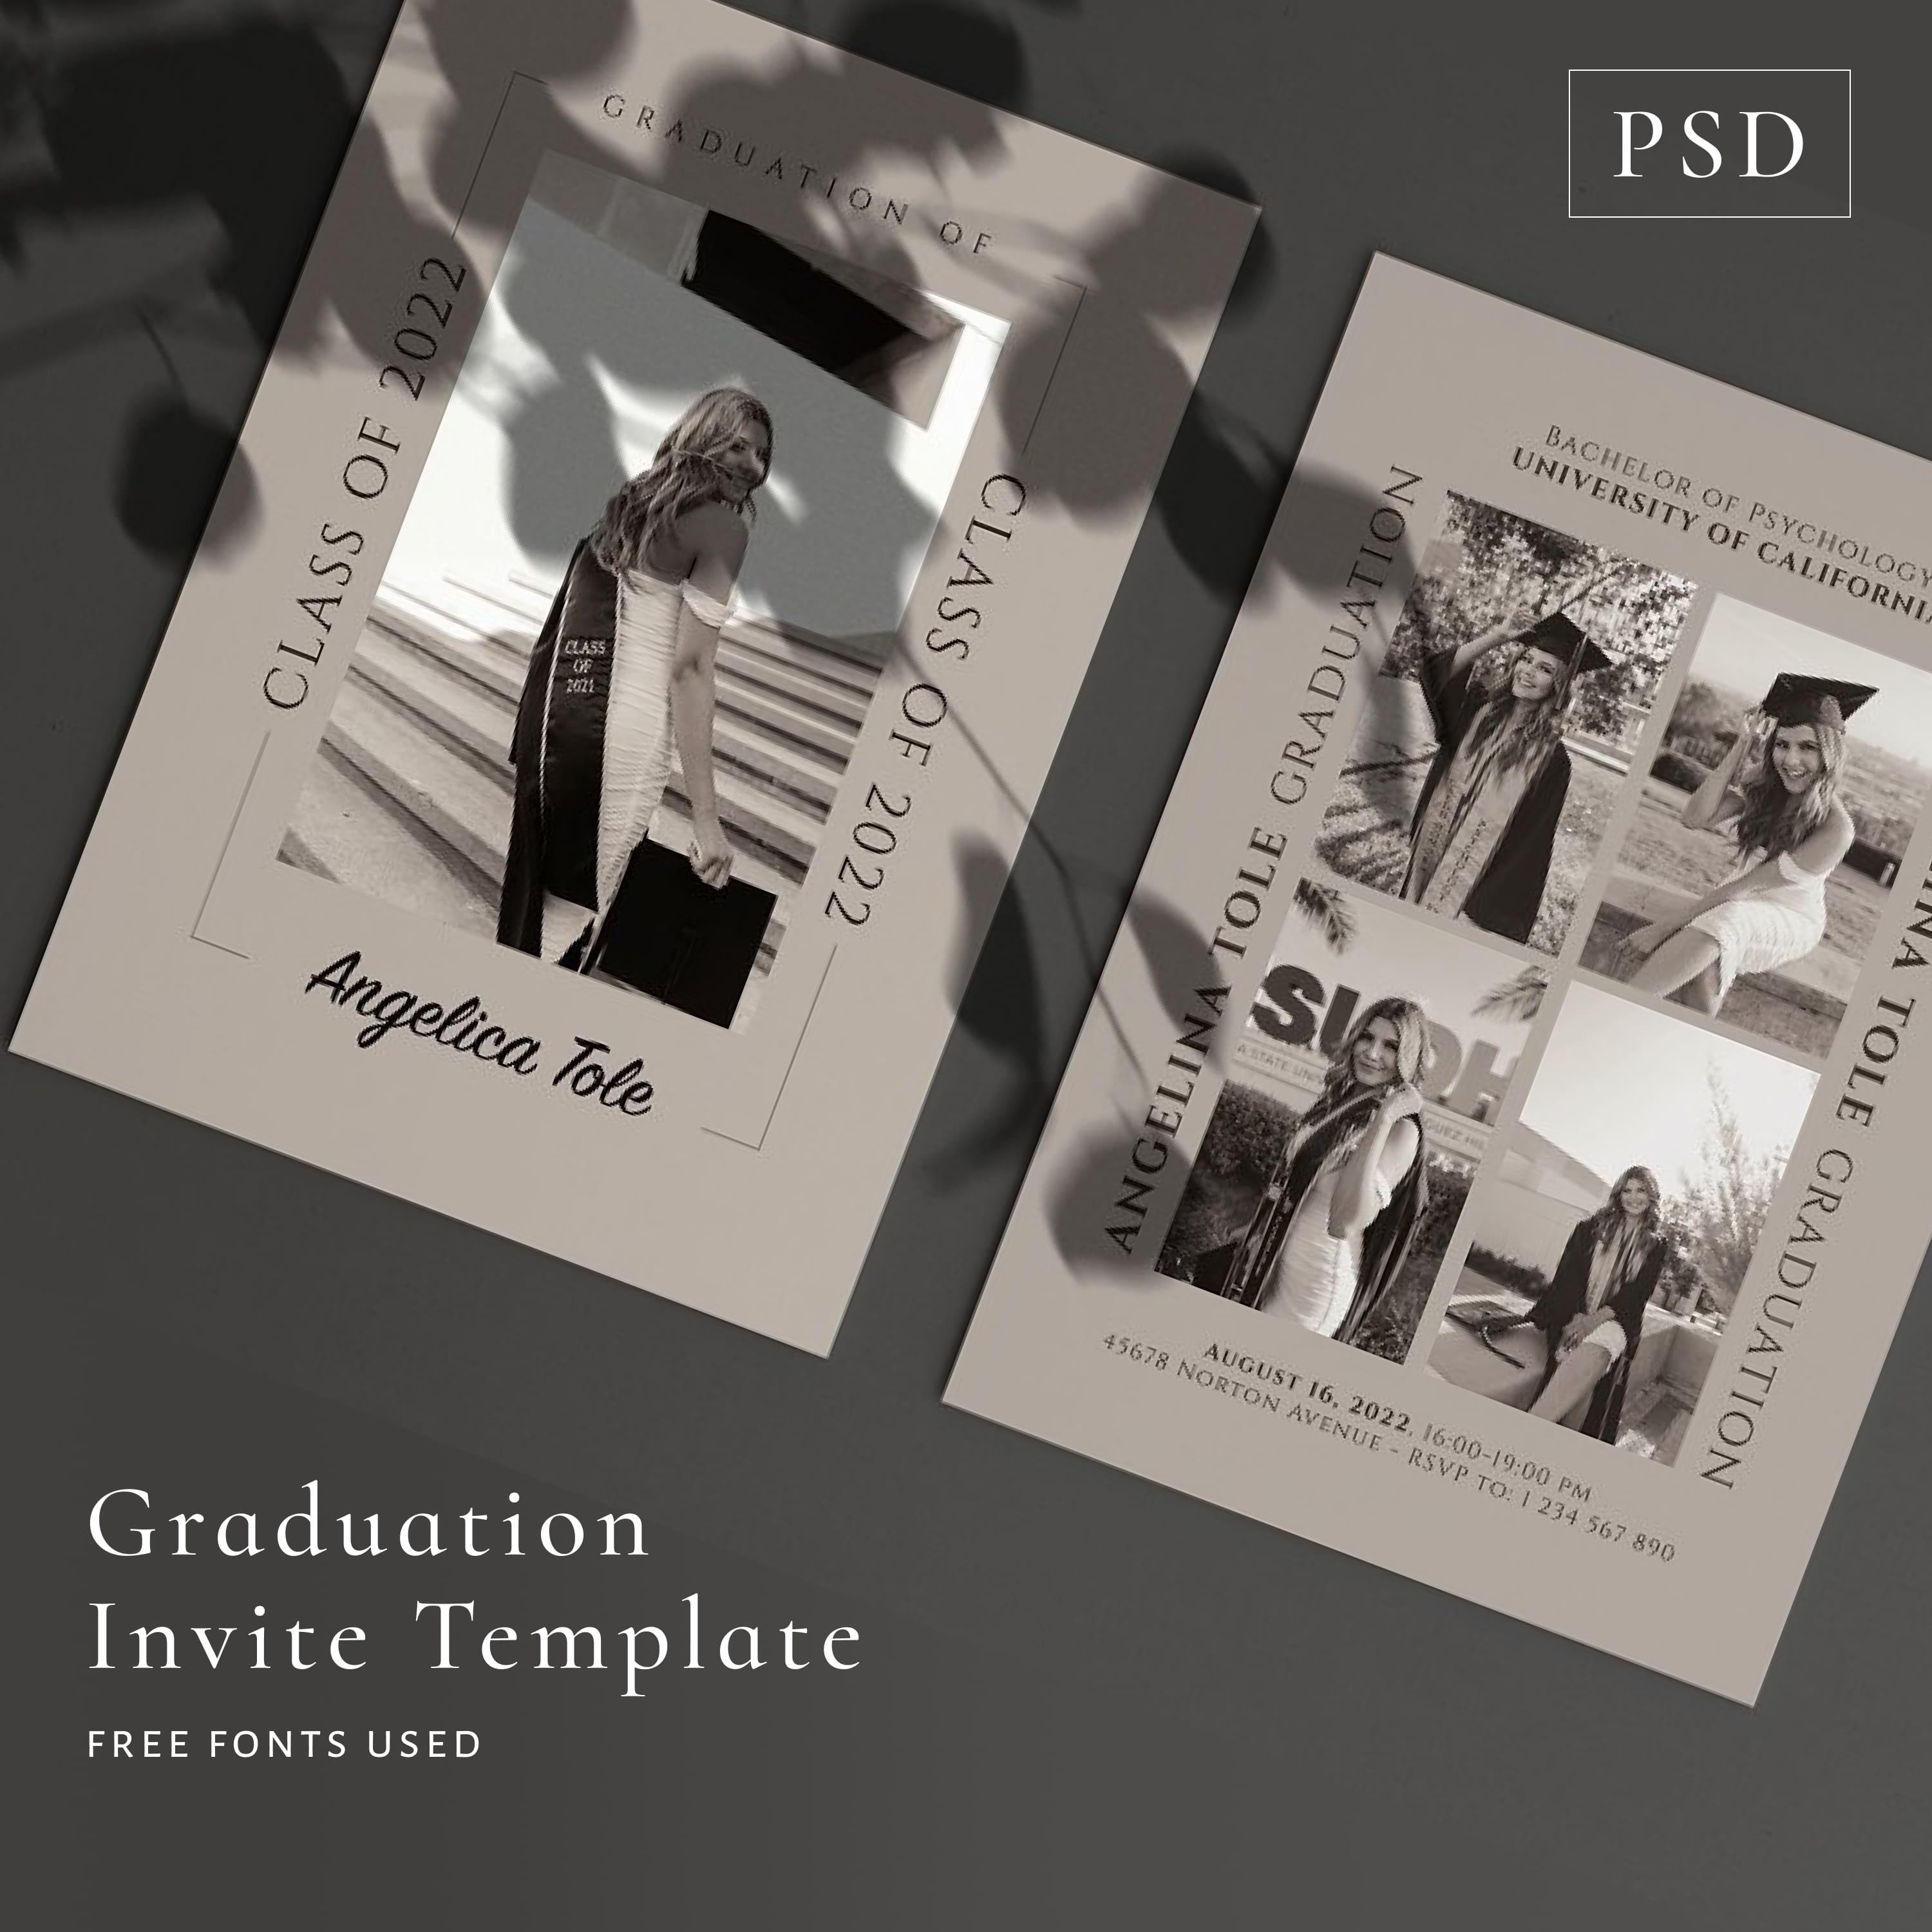 Graduation Invite Template PSD1500x1500 1.